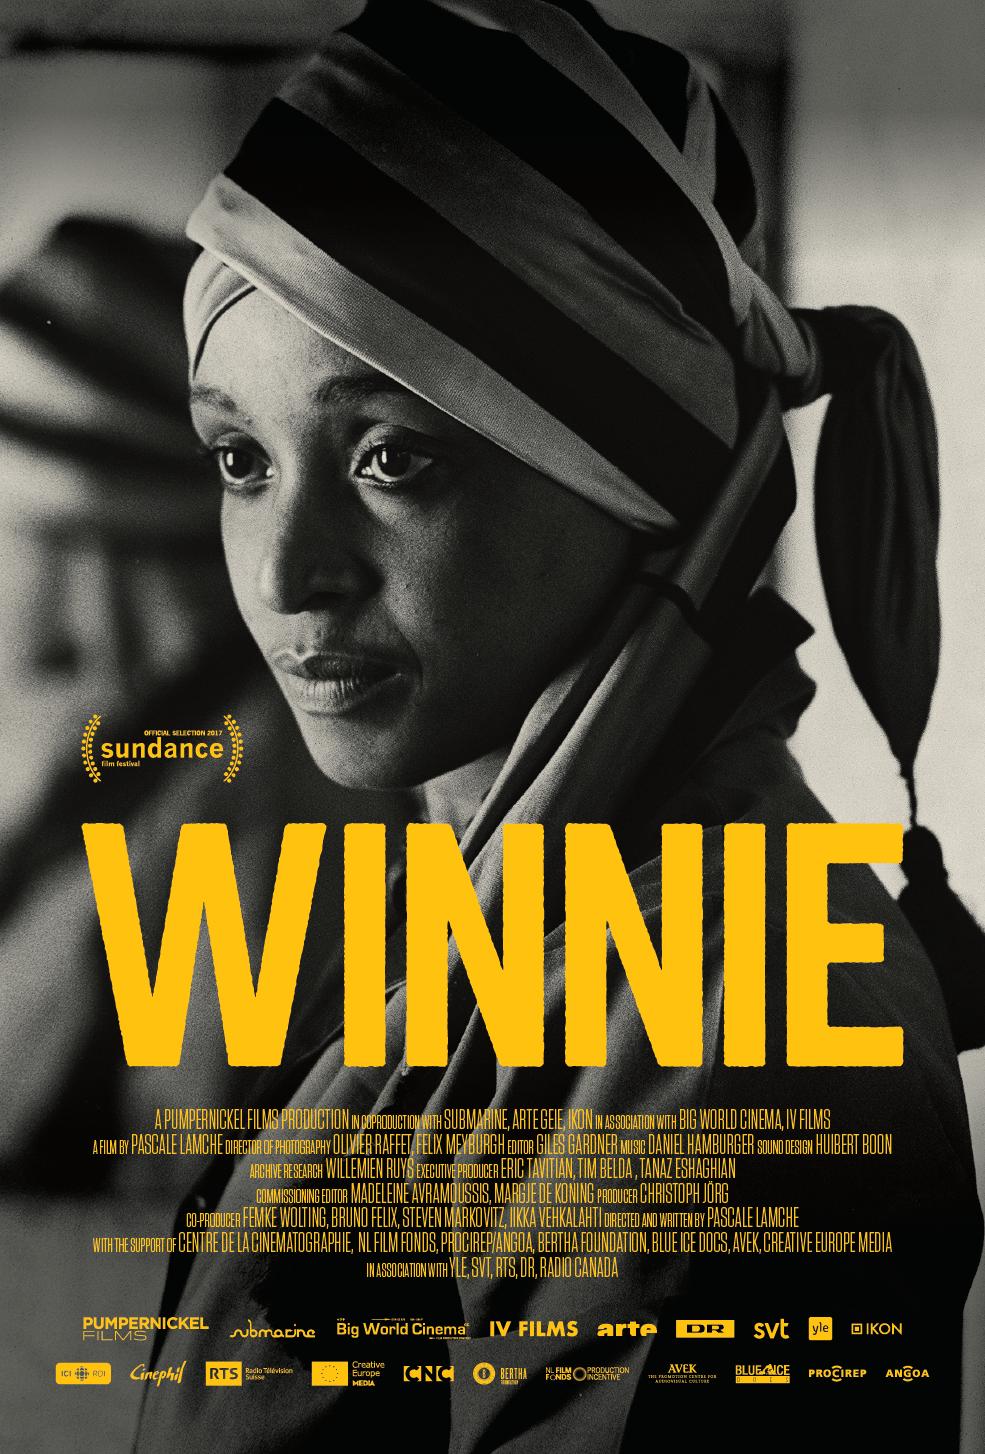 Nonton film Winnie layarkaca21 indoxx1 ganool online streaming terbaru